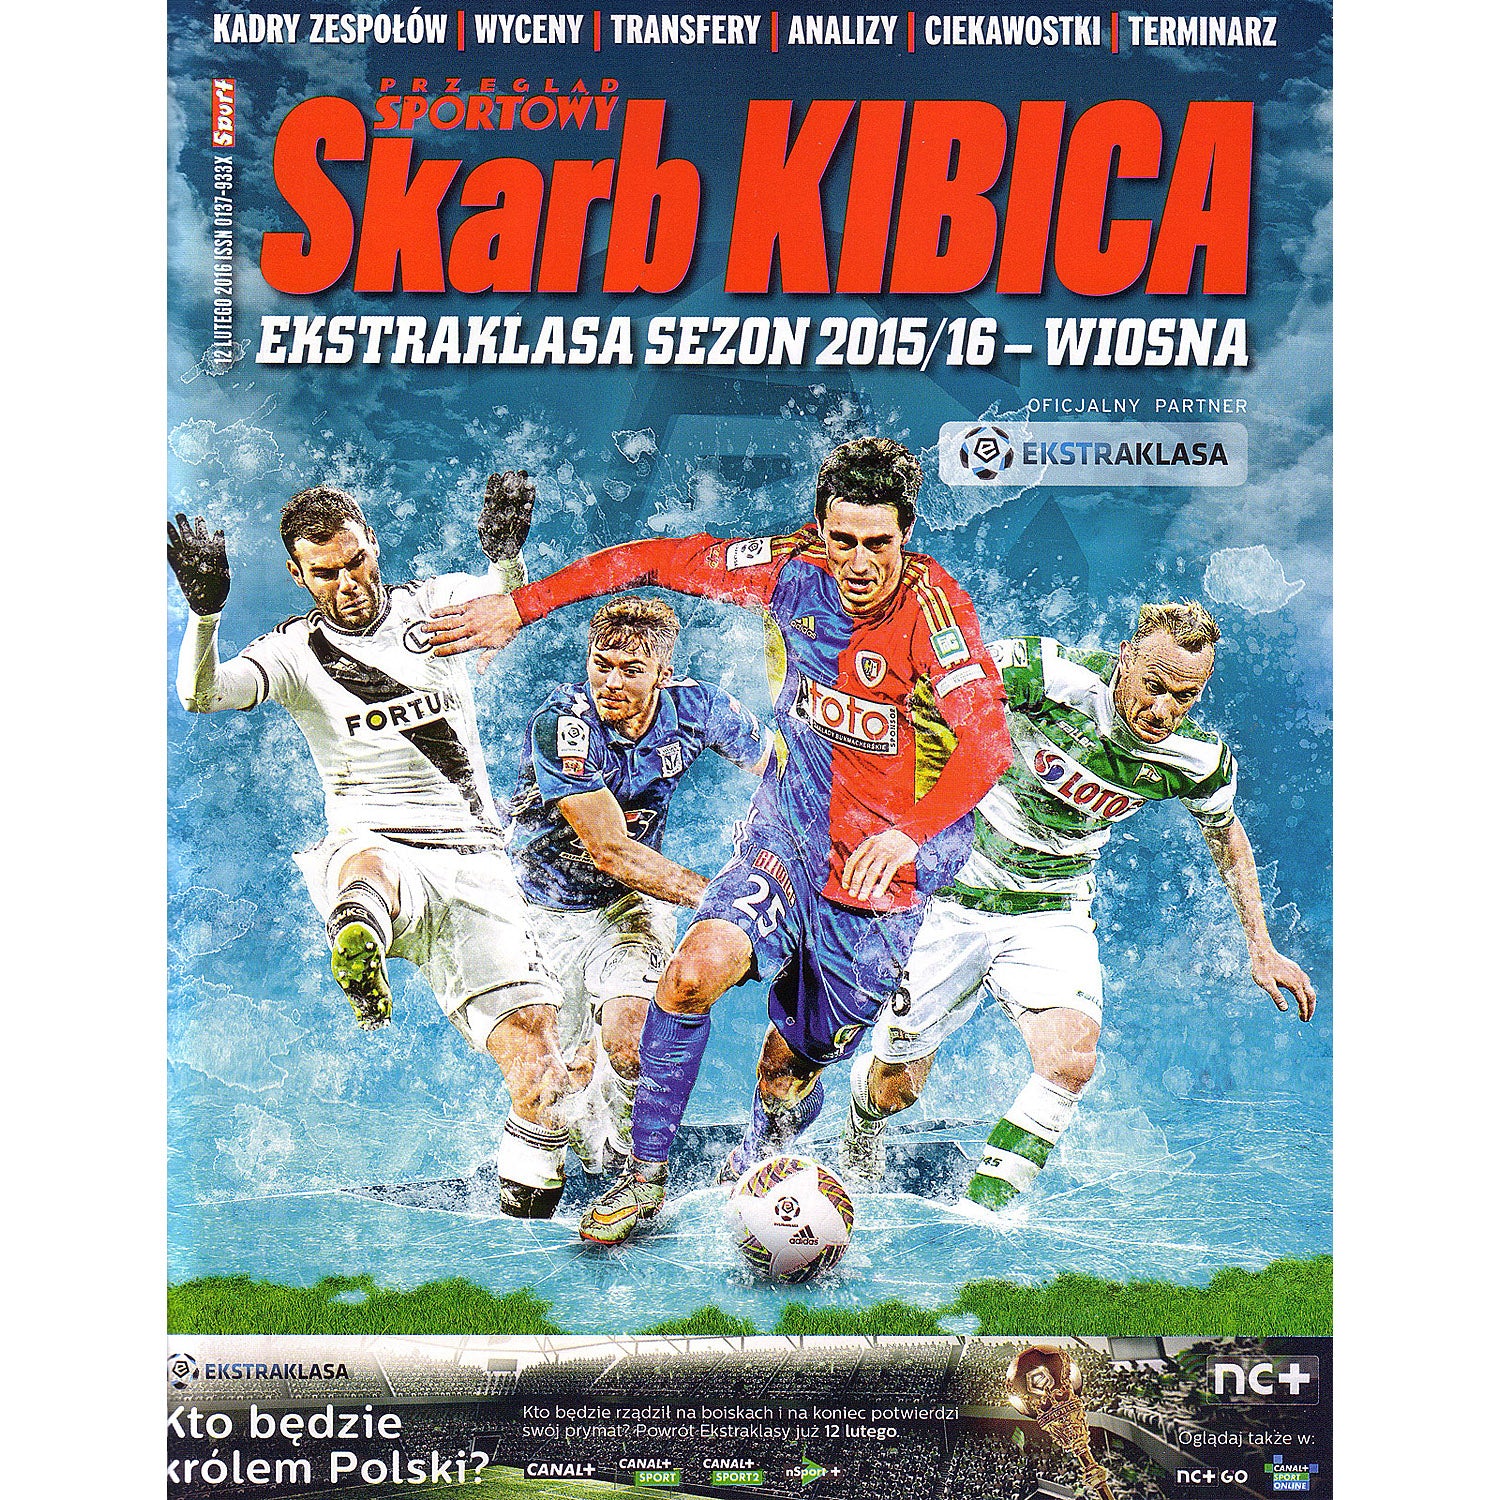 Skarb Kibica Ekstraklasa Wiosna 2015/16 and I, II & III Liga Wiosna 2015/16 (Poland Half-Season Previews)